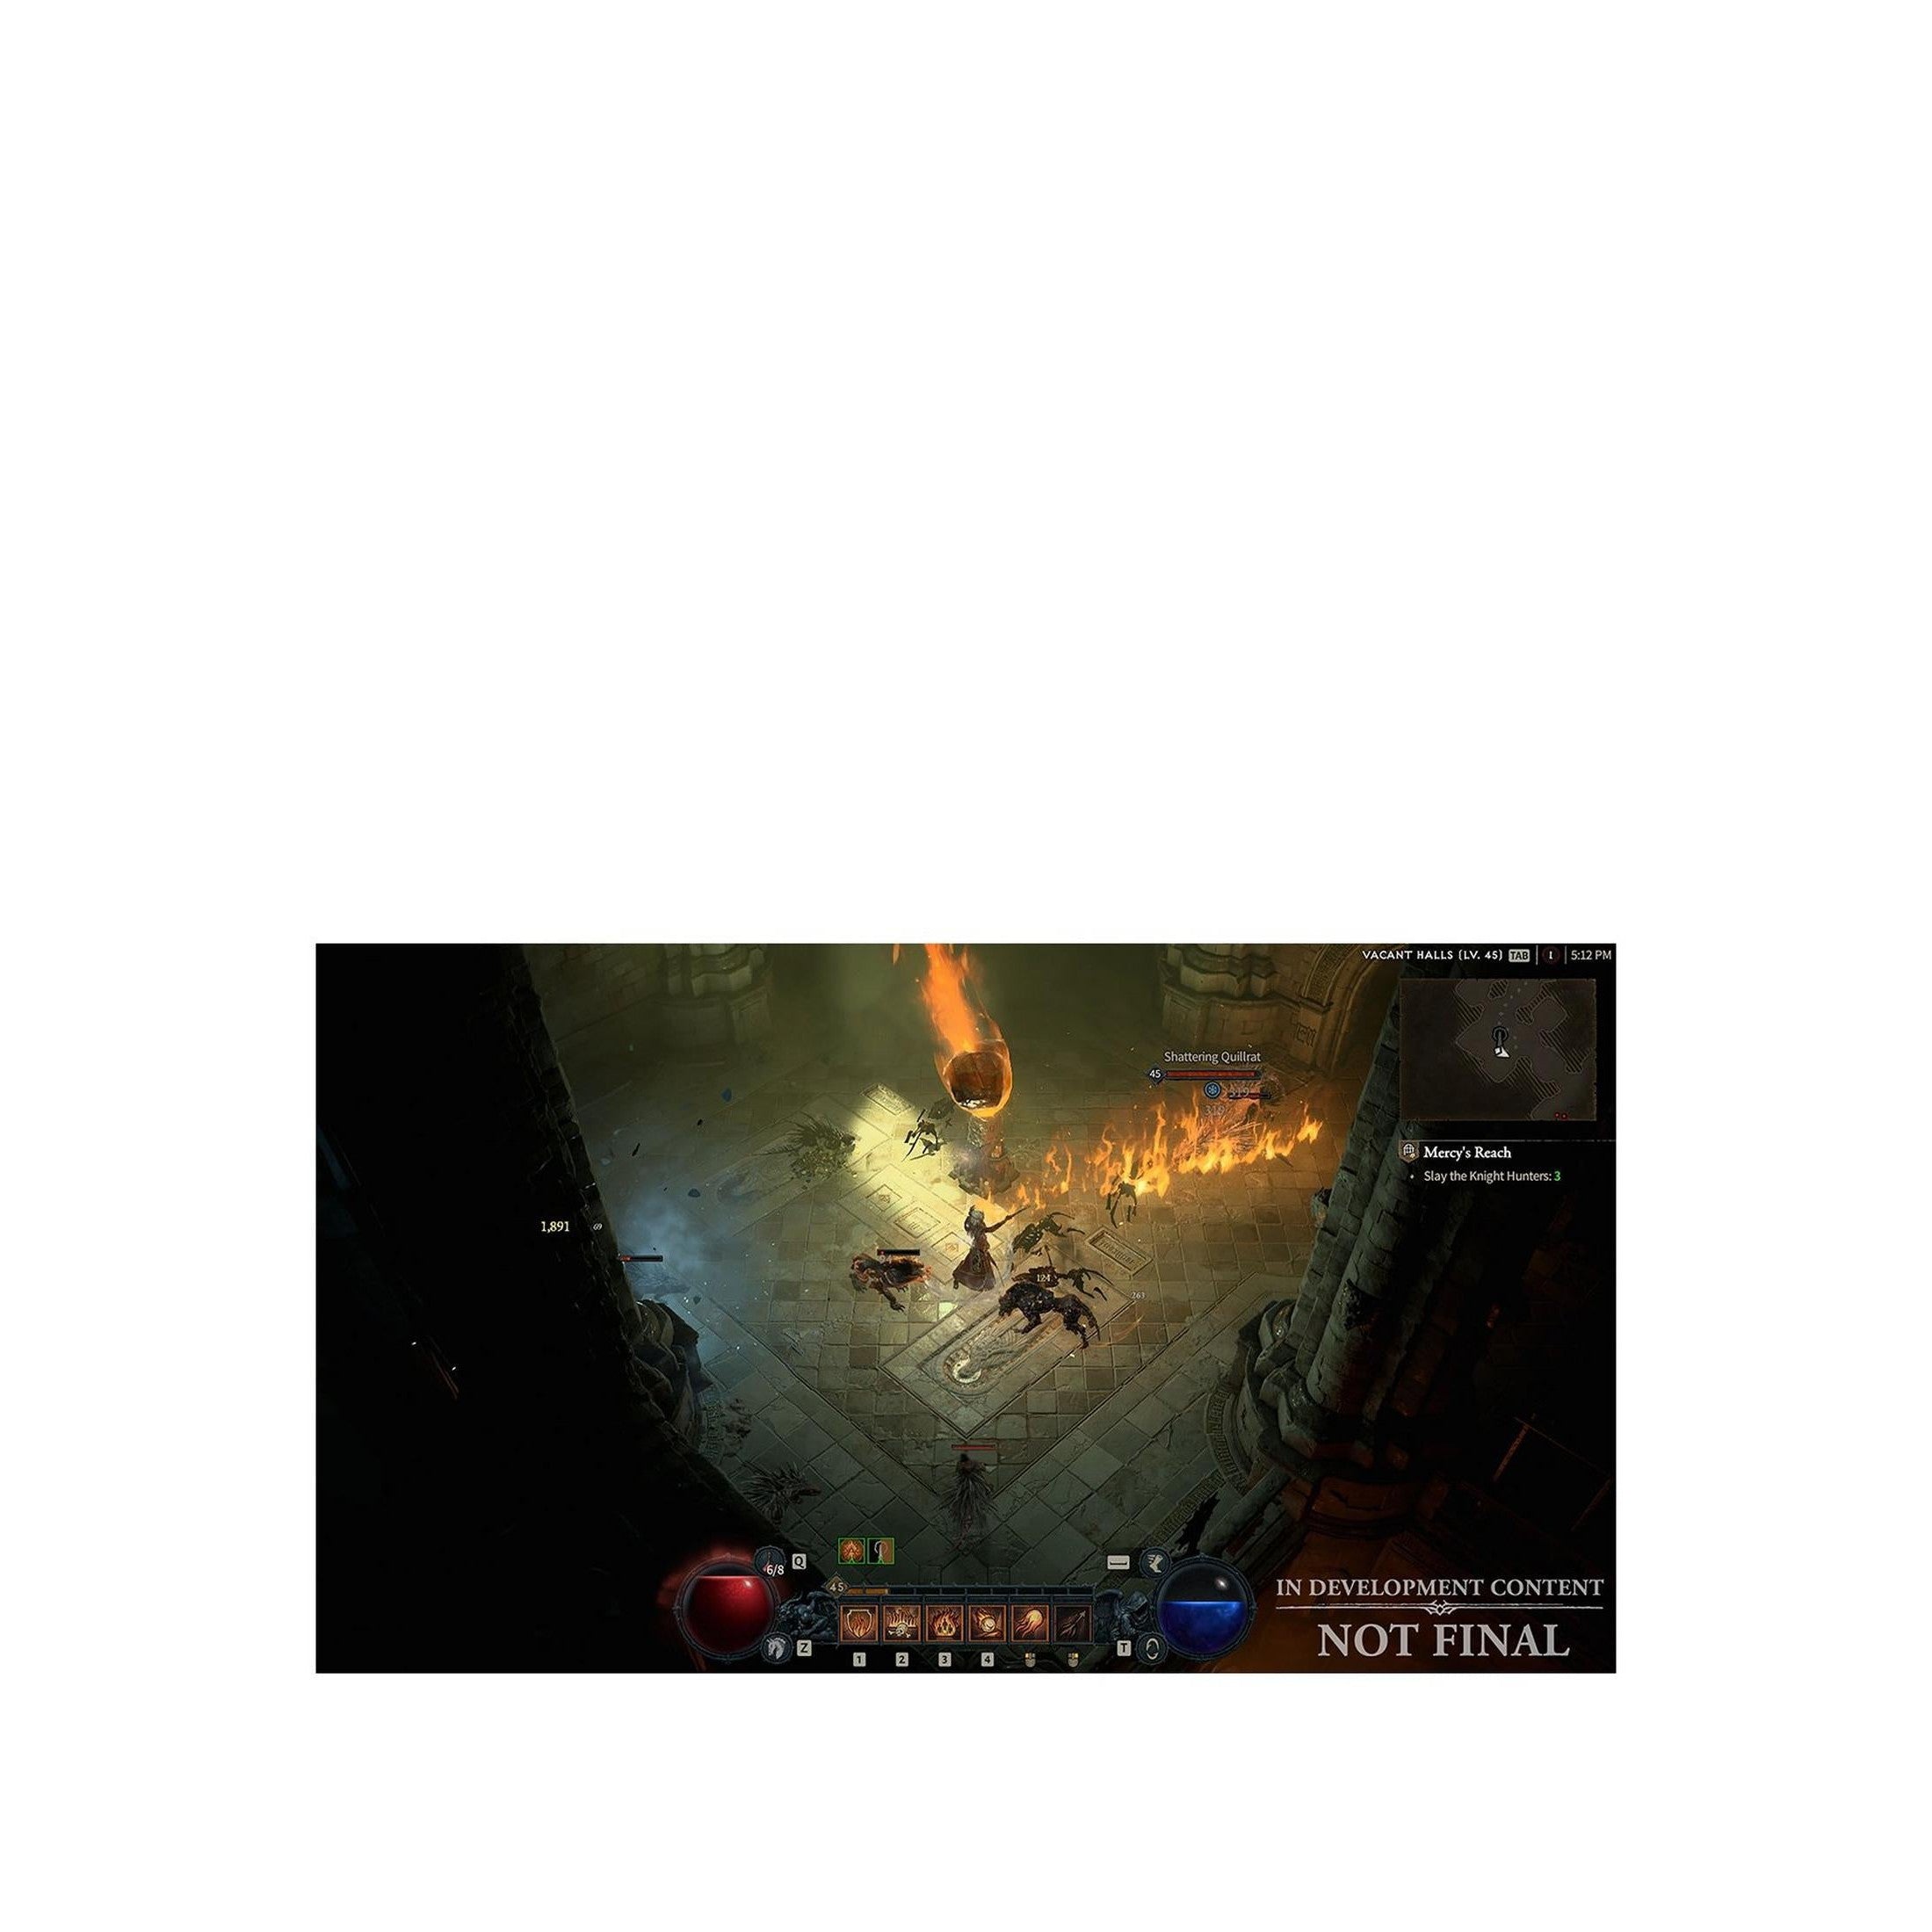 Diablo IV Standard Edition (PS5)